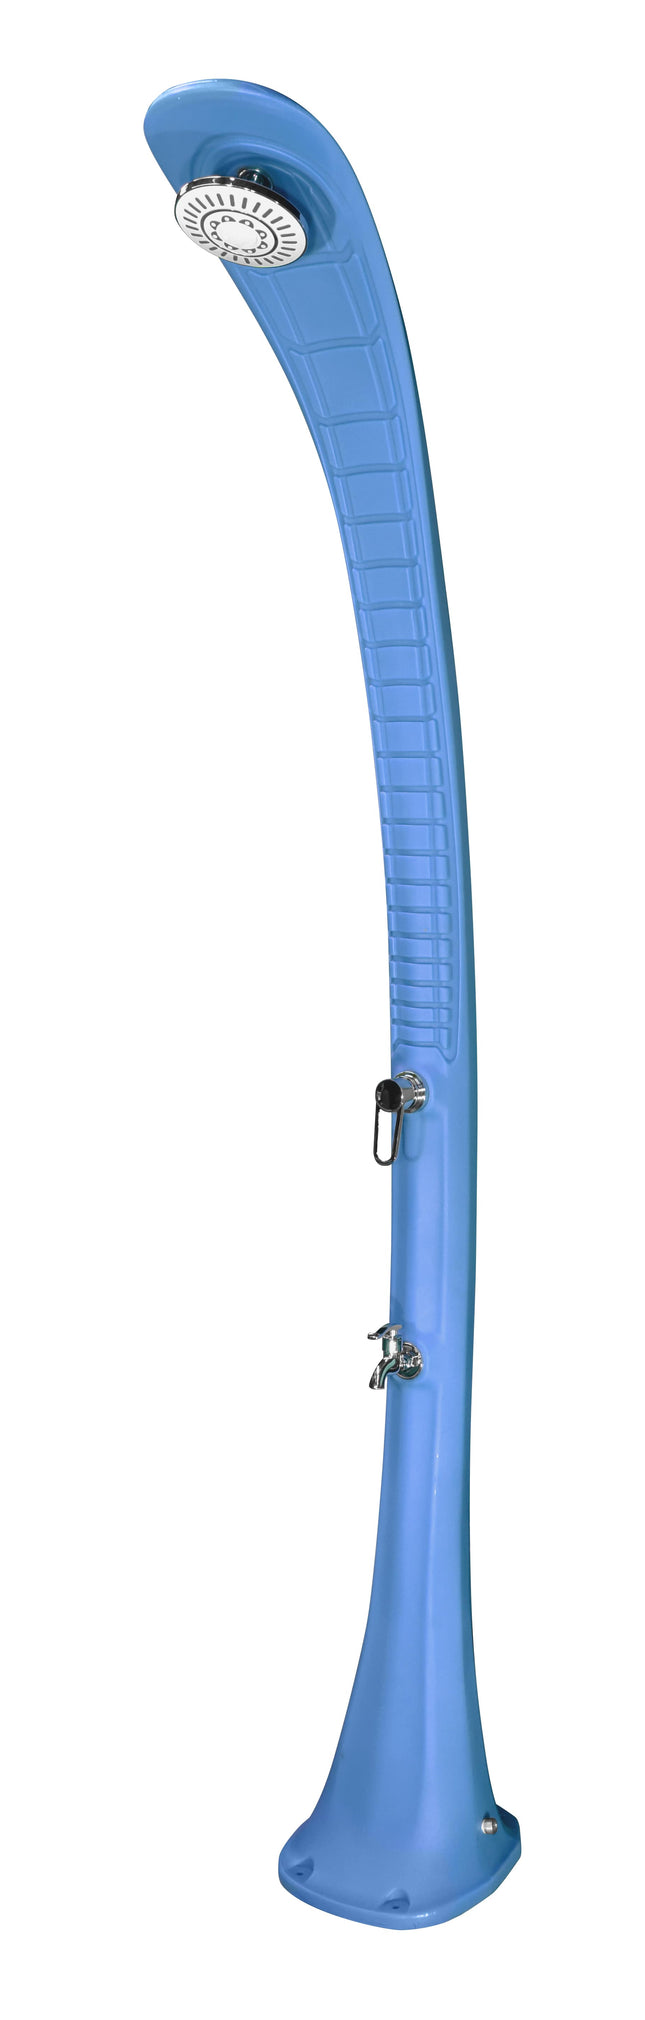 Doccia solare Cobra da 32 litri - Blu